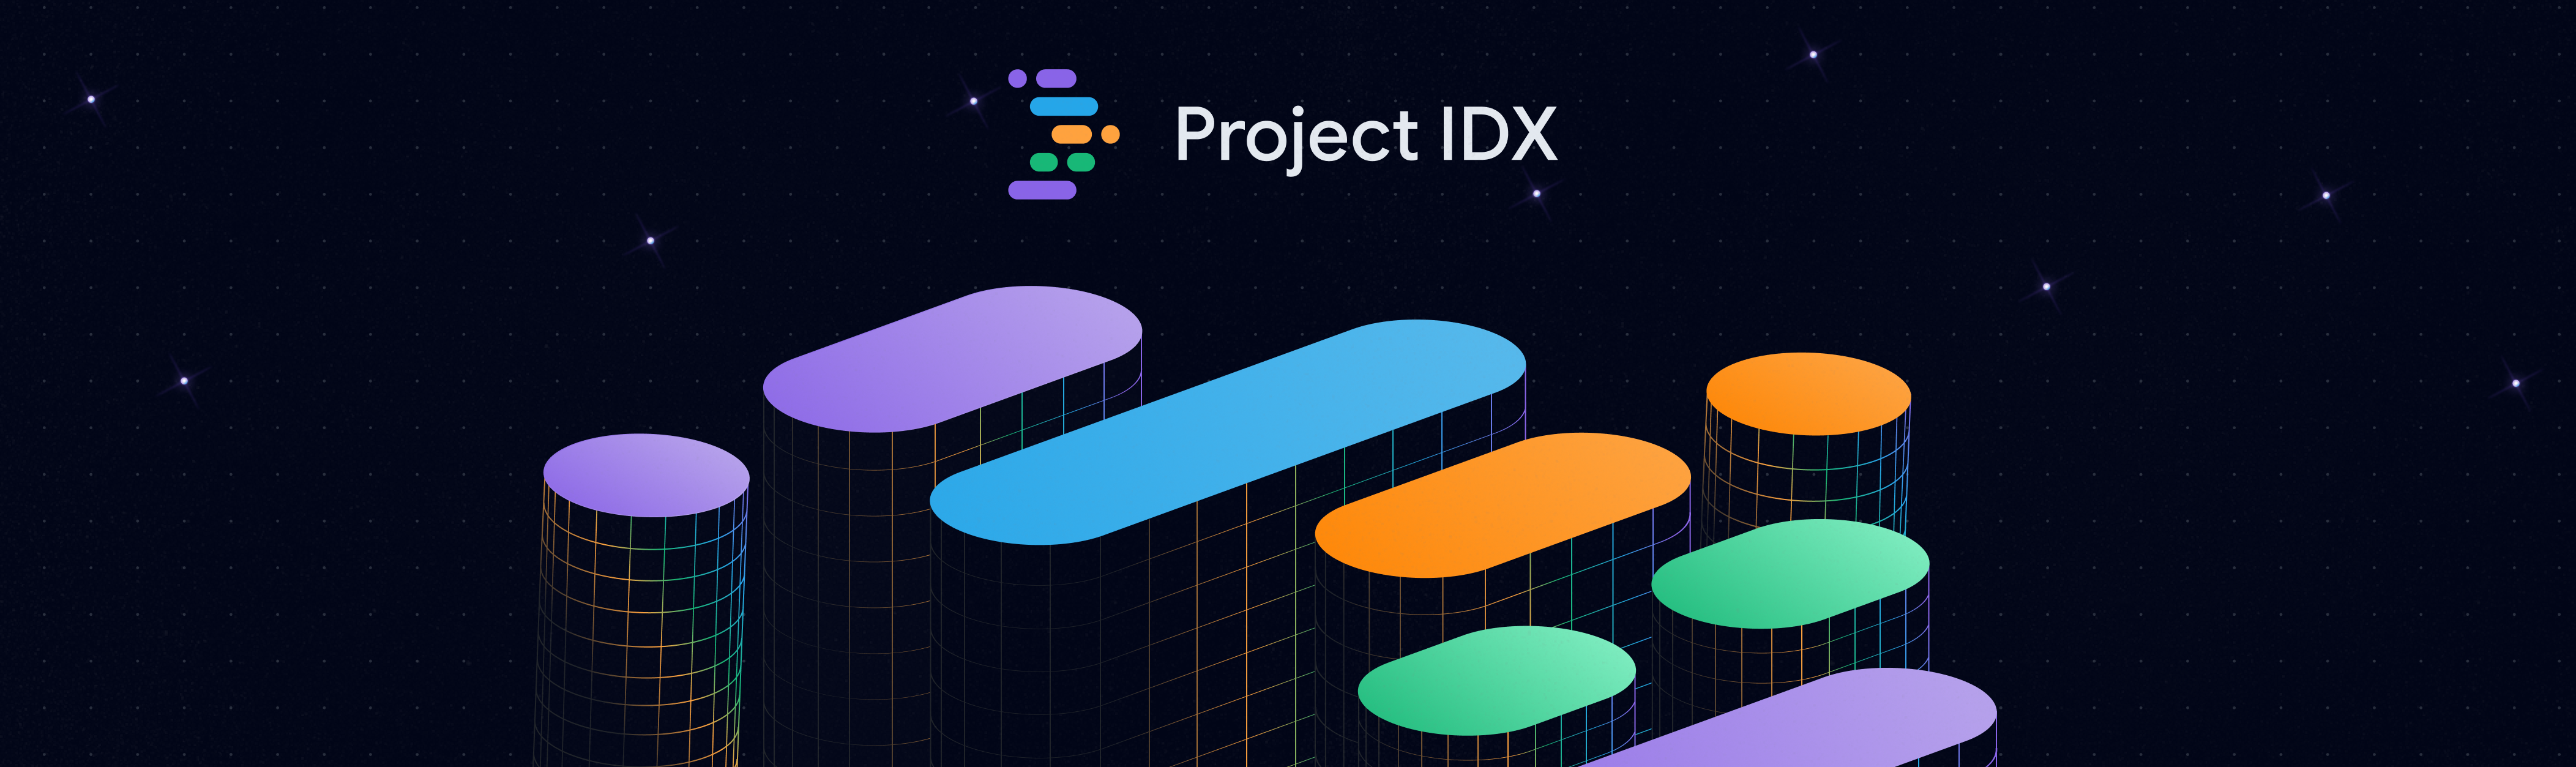 Project IDX at I/O Banner